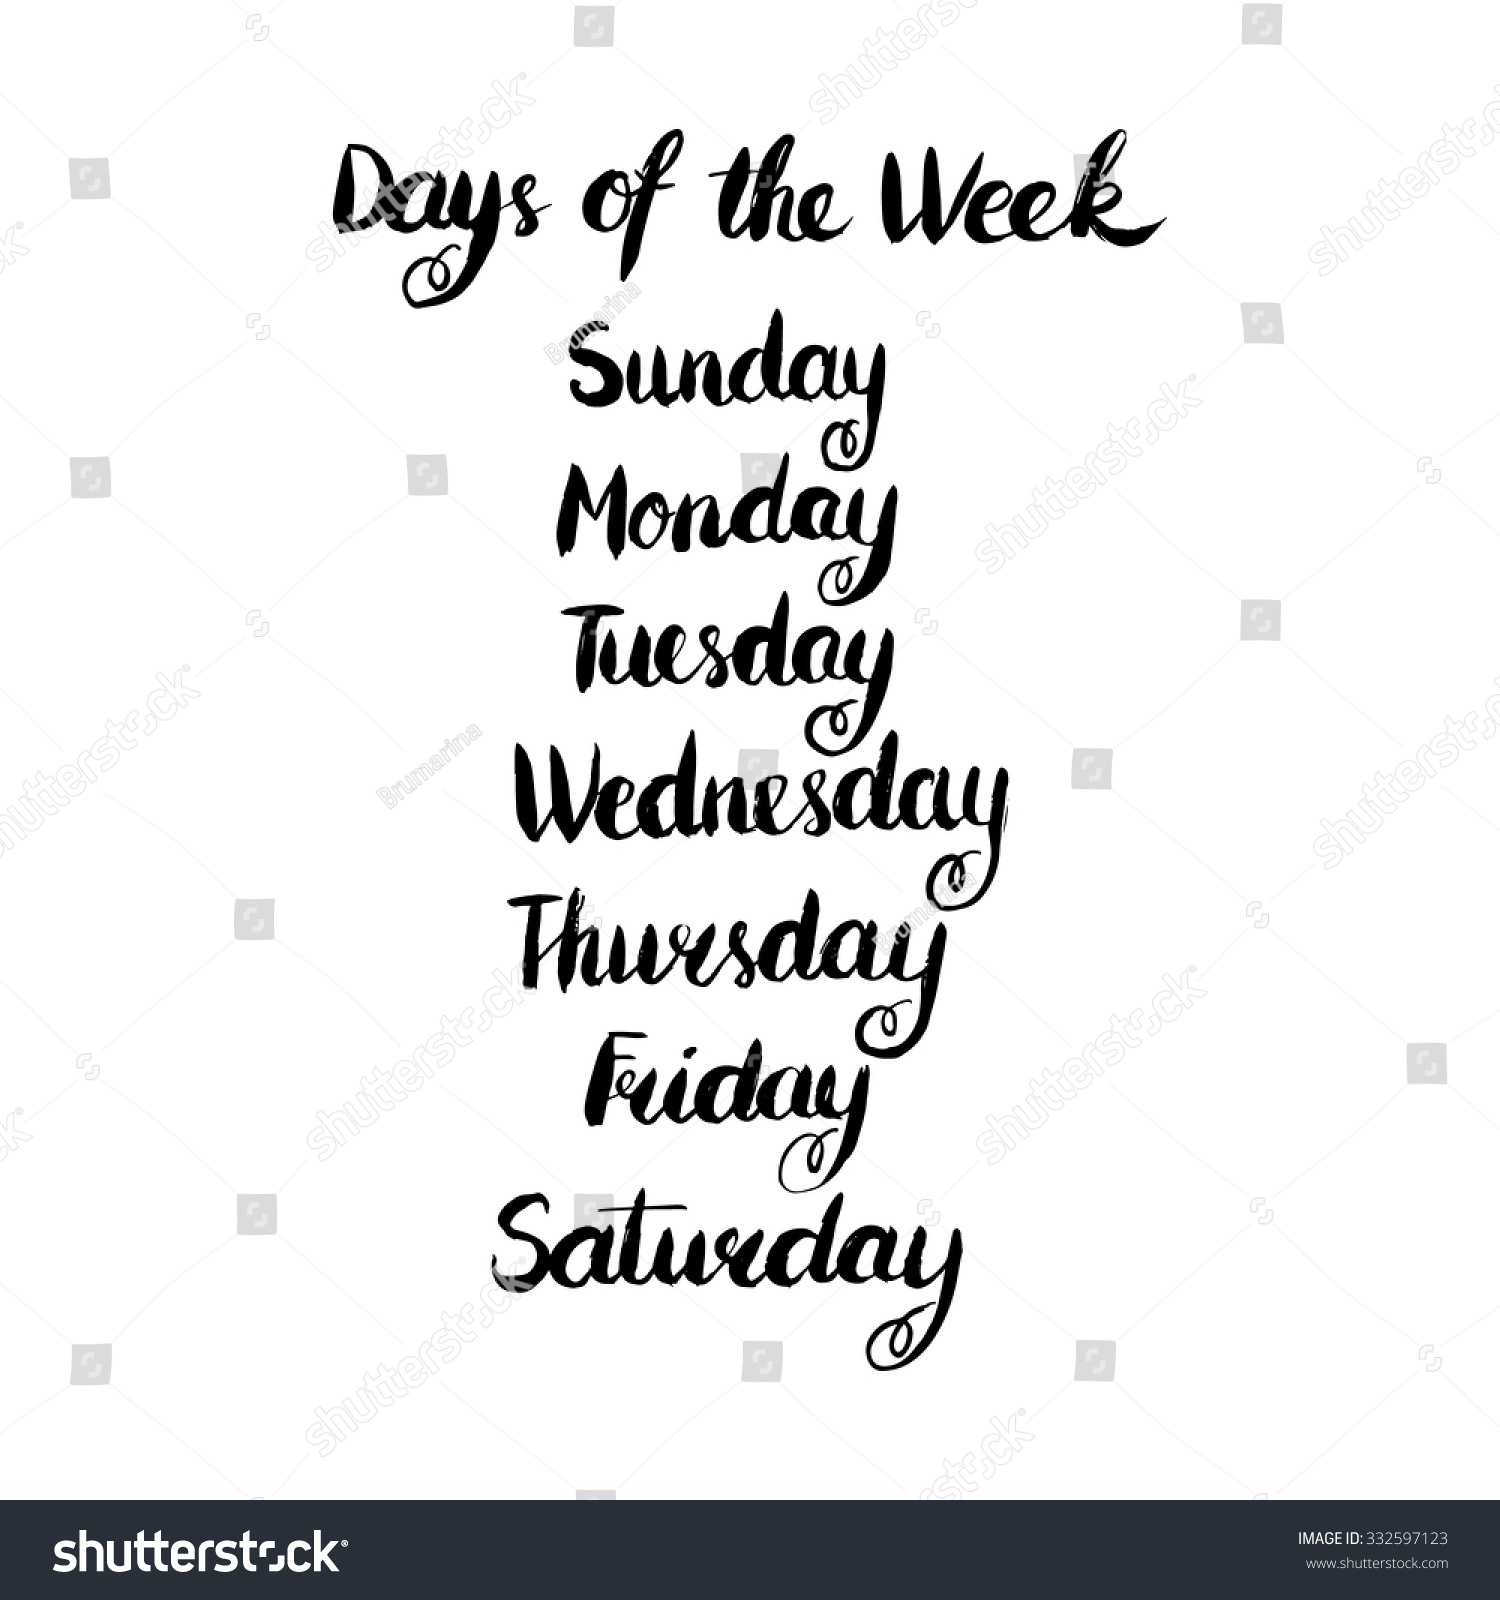 Handwritten Days Of The Week Monday Tuesday Wednesday Thursday Friday Saturday Sunday 